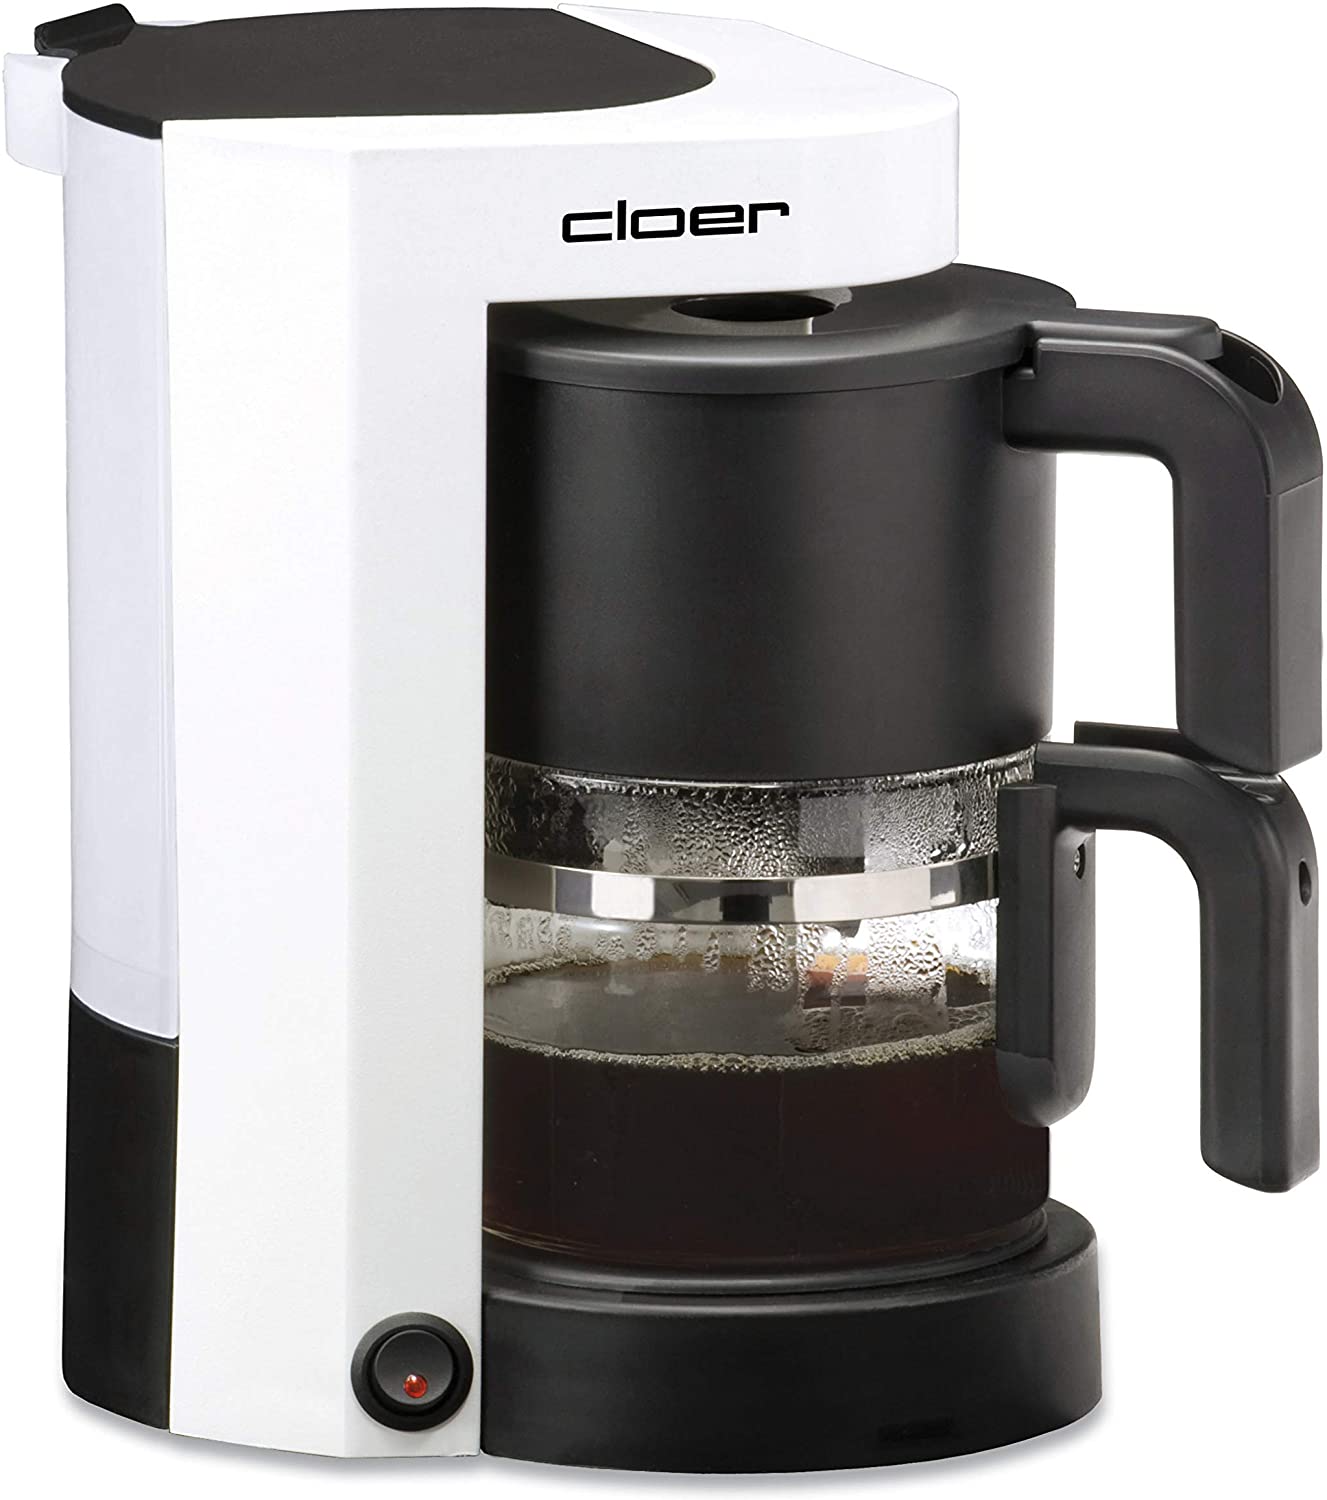 Cloer 5981 coffee maker - coffee makers (freestanding, White, Drip, 5 cups, Coffee, 0.92 m)